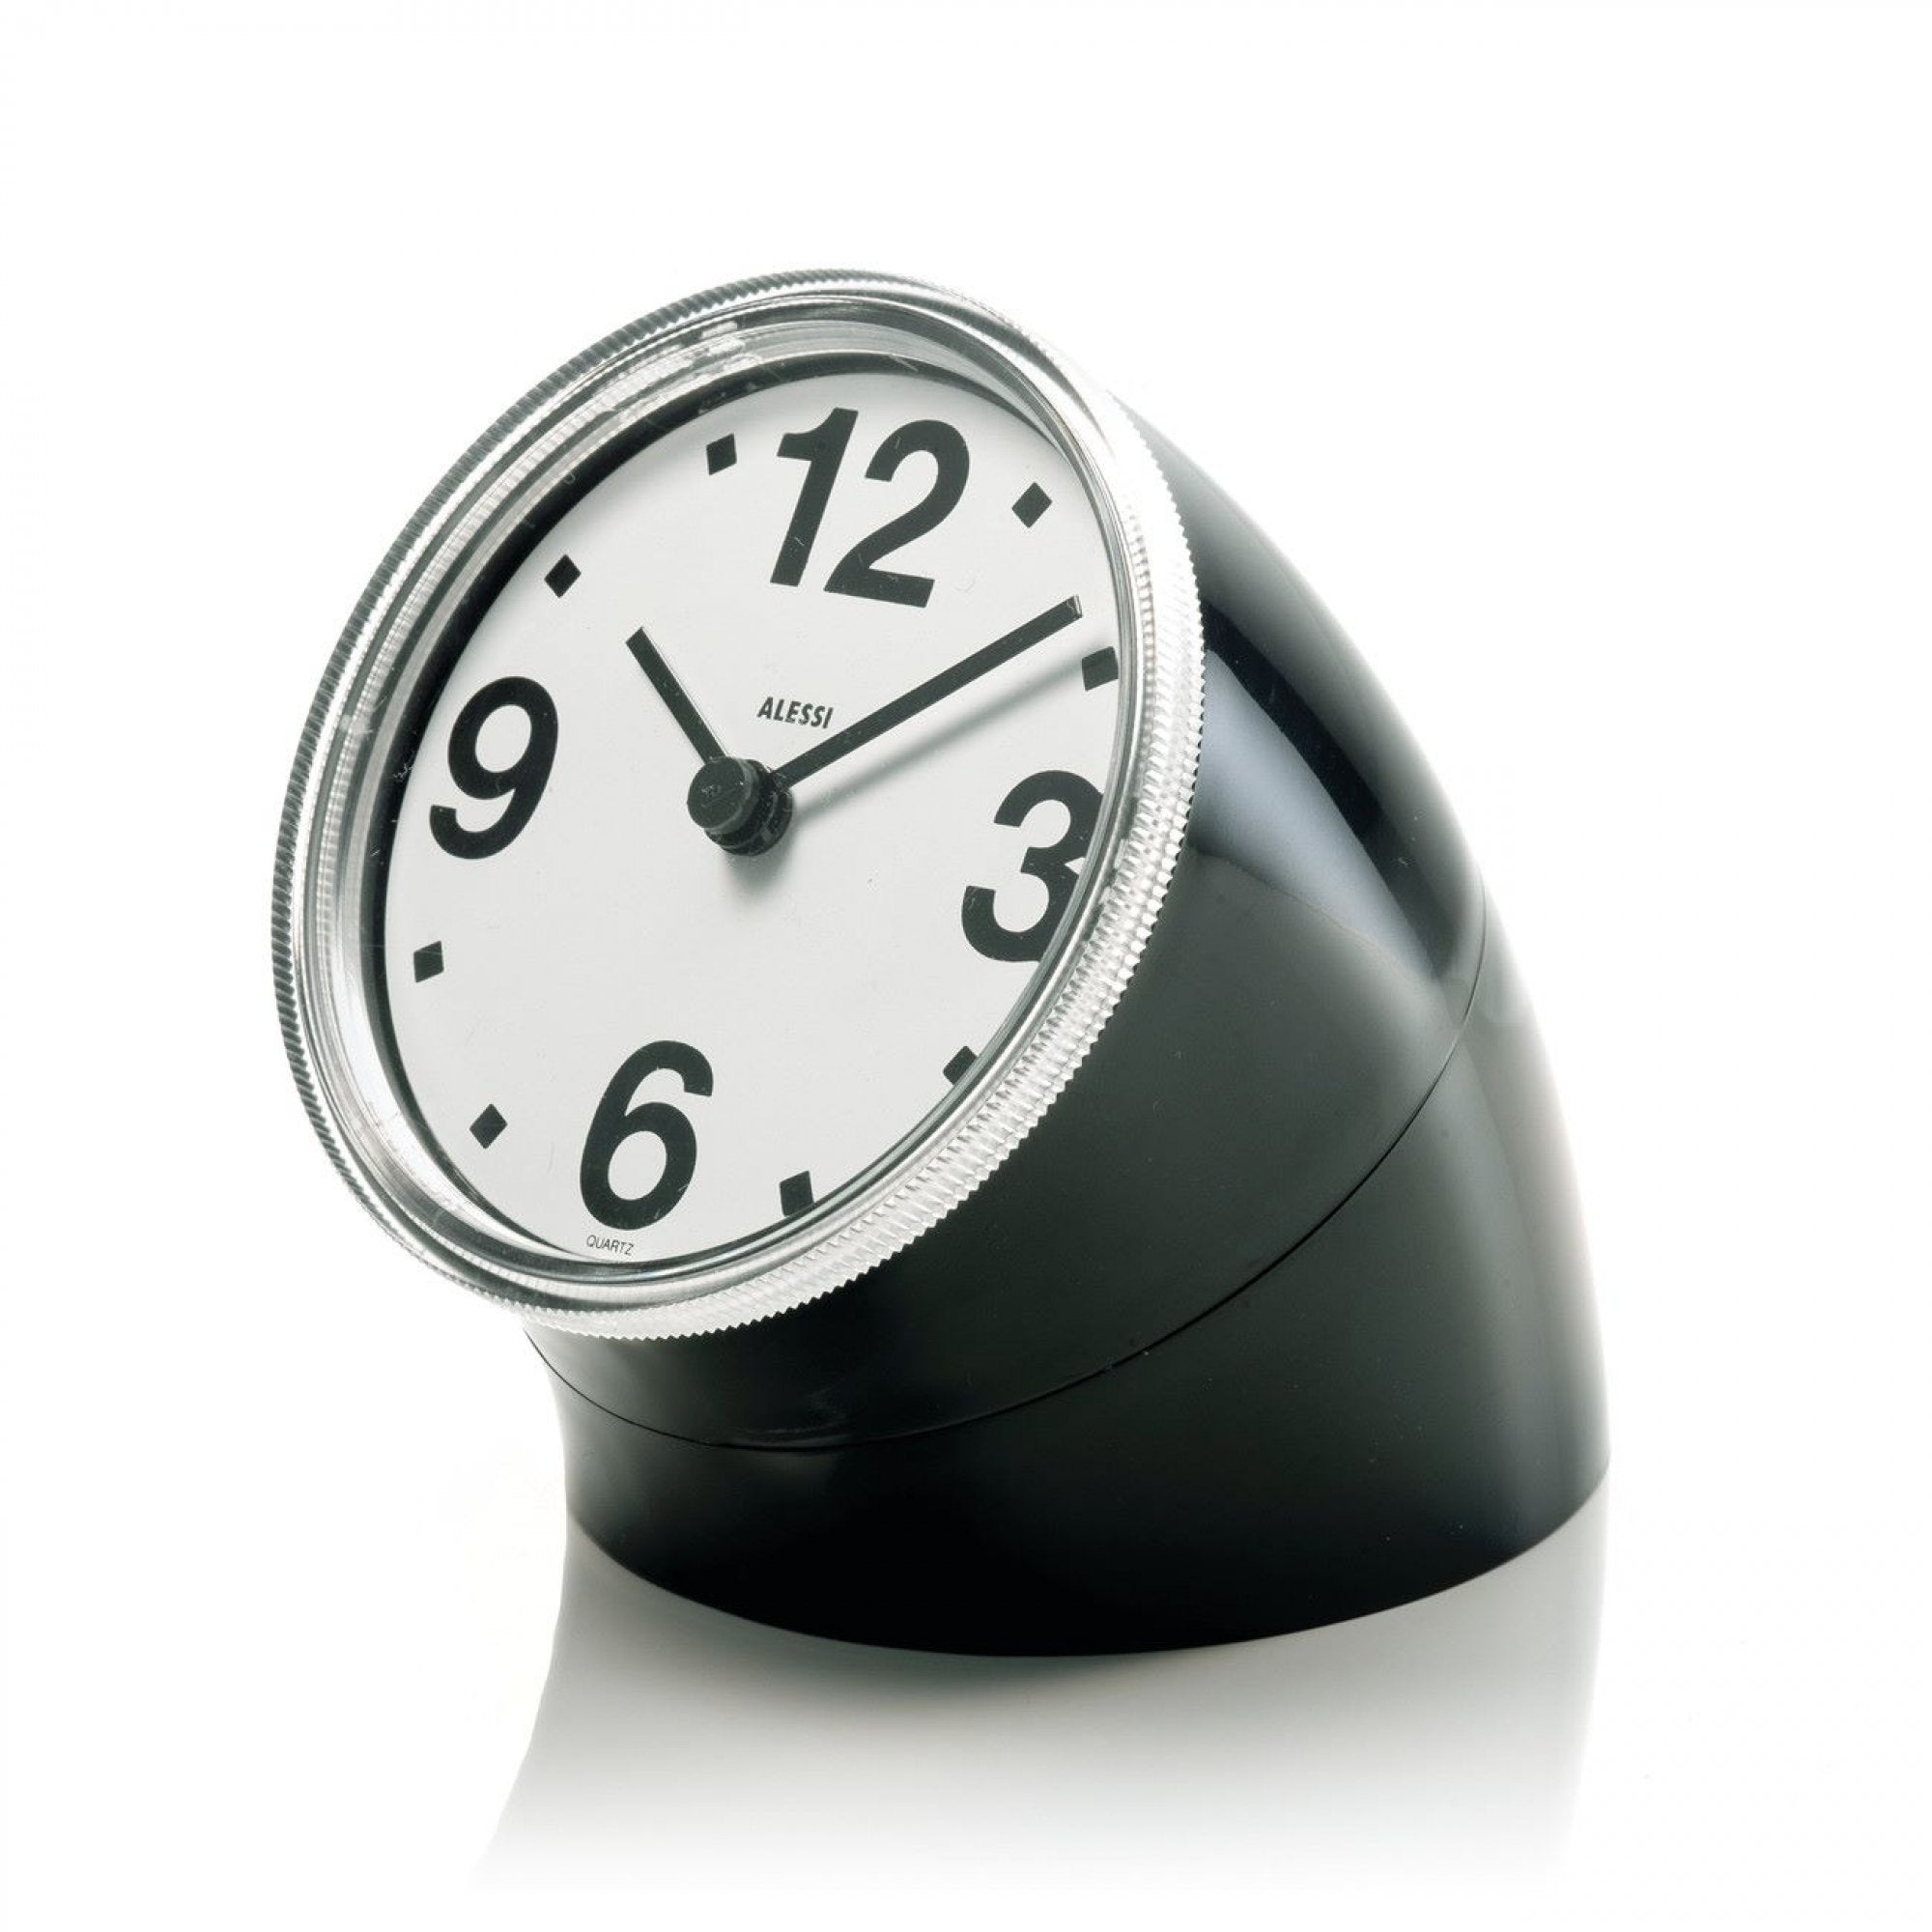 01 B Cronotime clock black